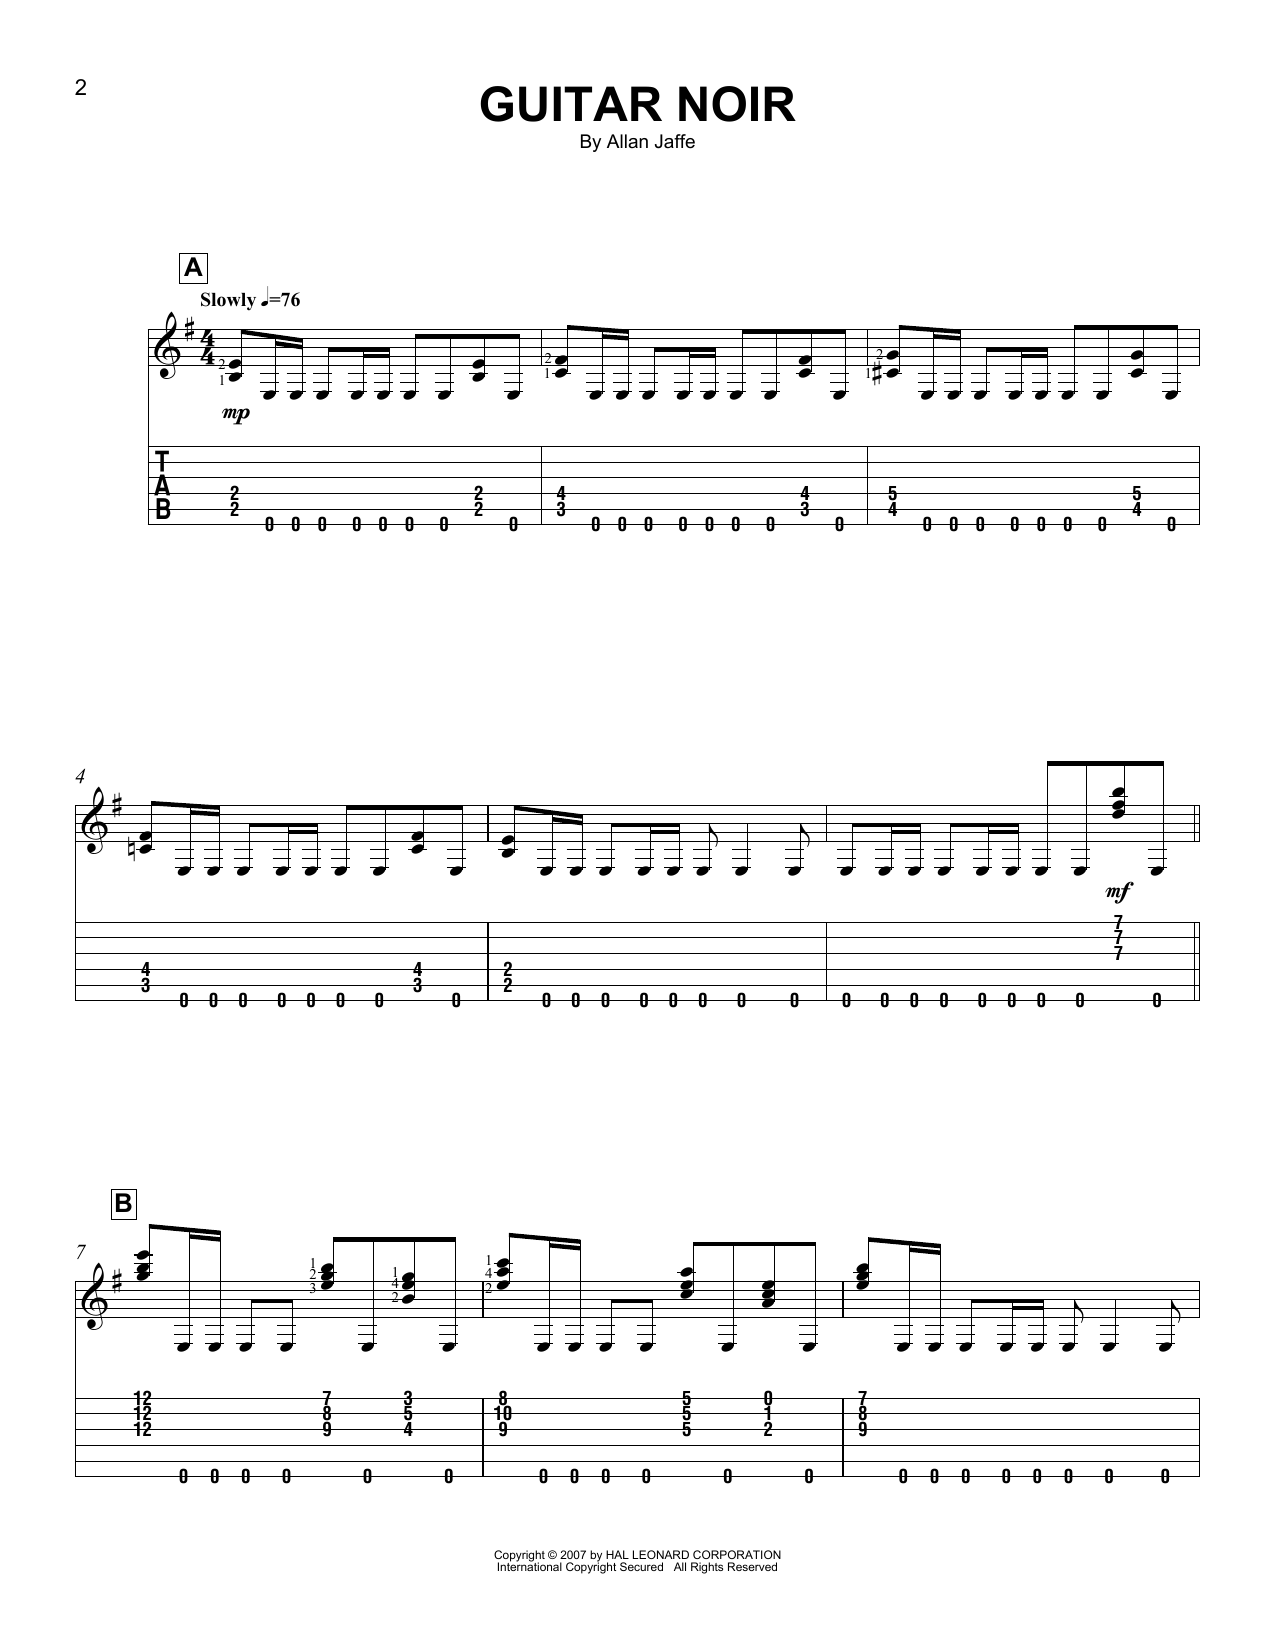 Allan Jaffe Guitar Noir Sheet Music Notes & Chords for Easy Guitar Tab - Download or Print PDF